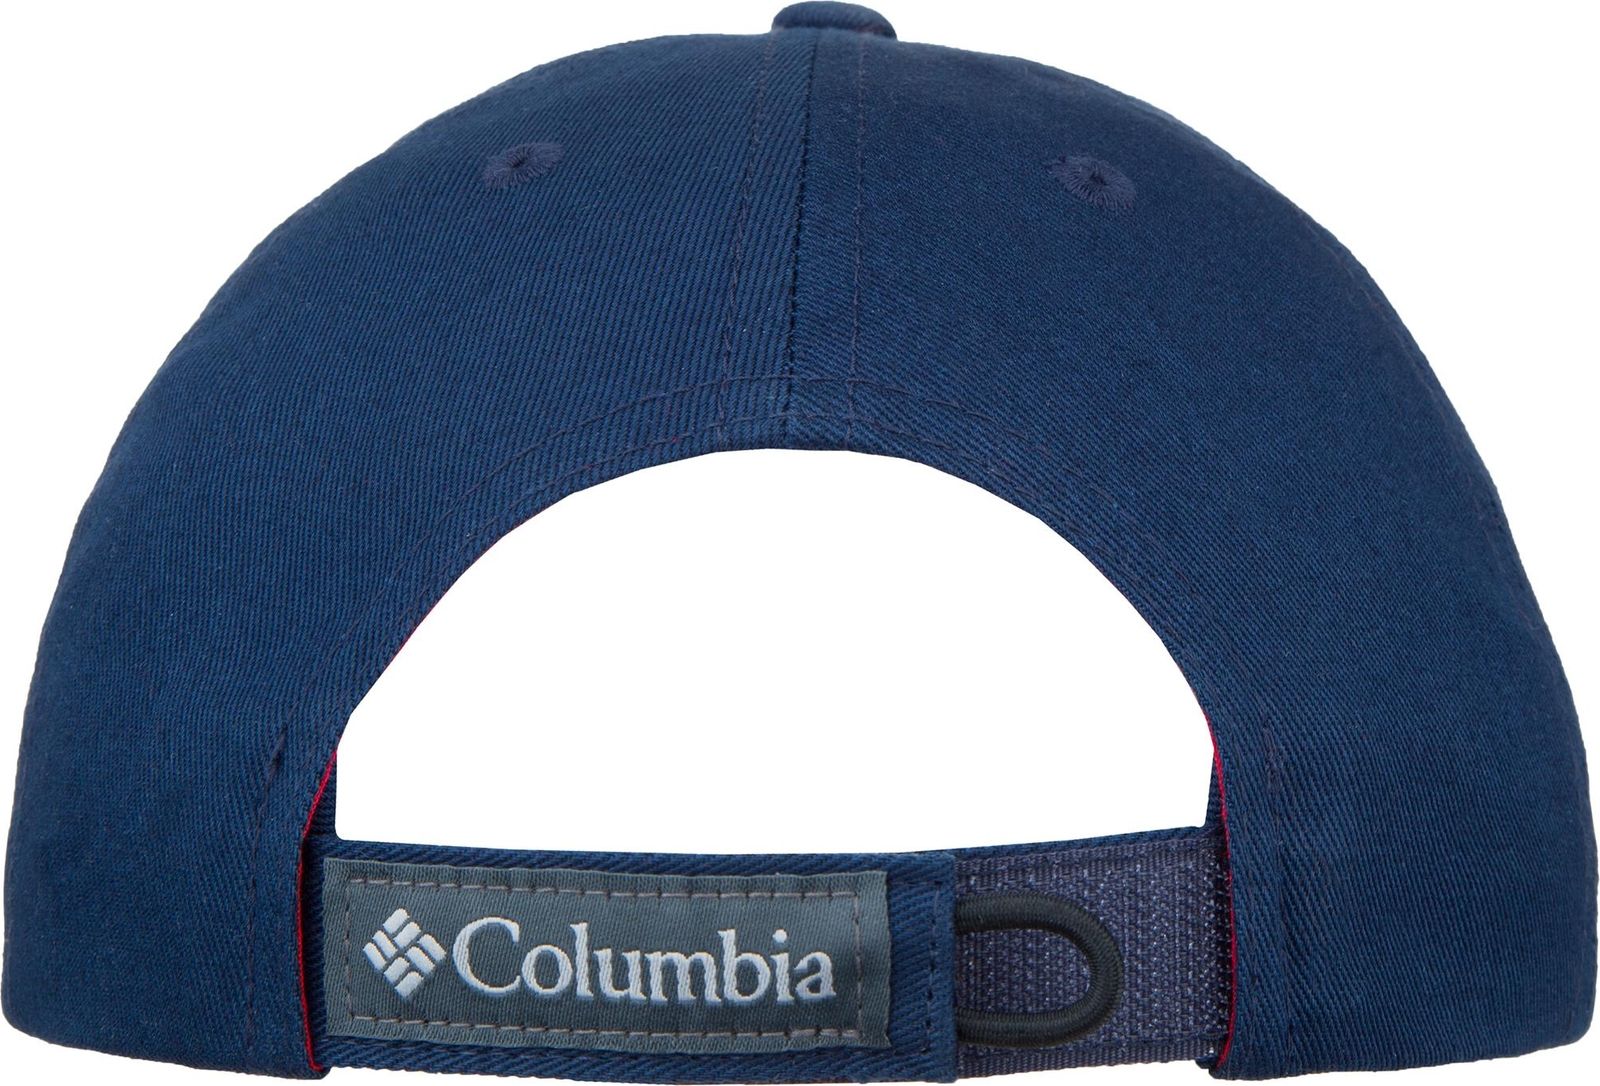   Columbia CSC Youth Ball Cap, : -. 1840171-464.  